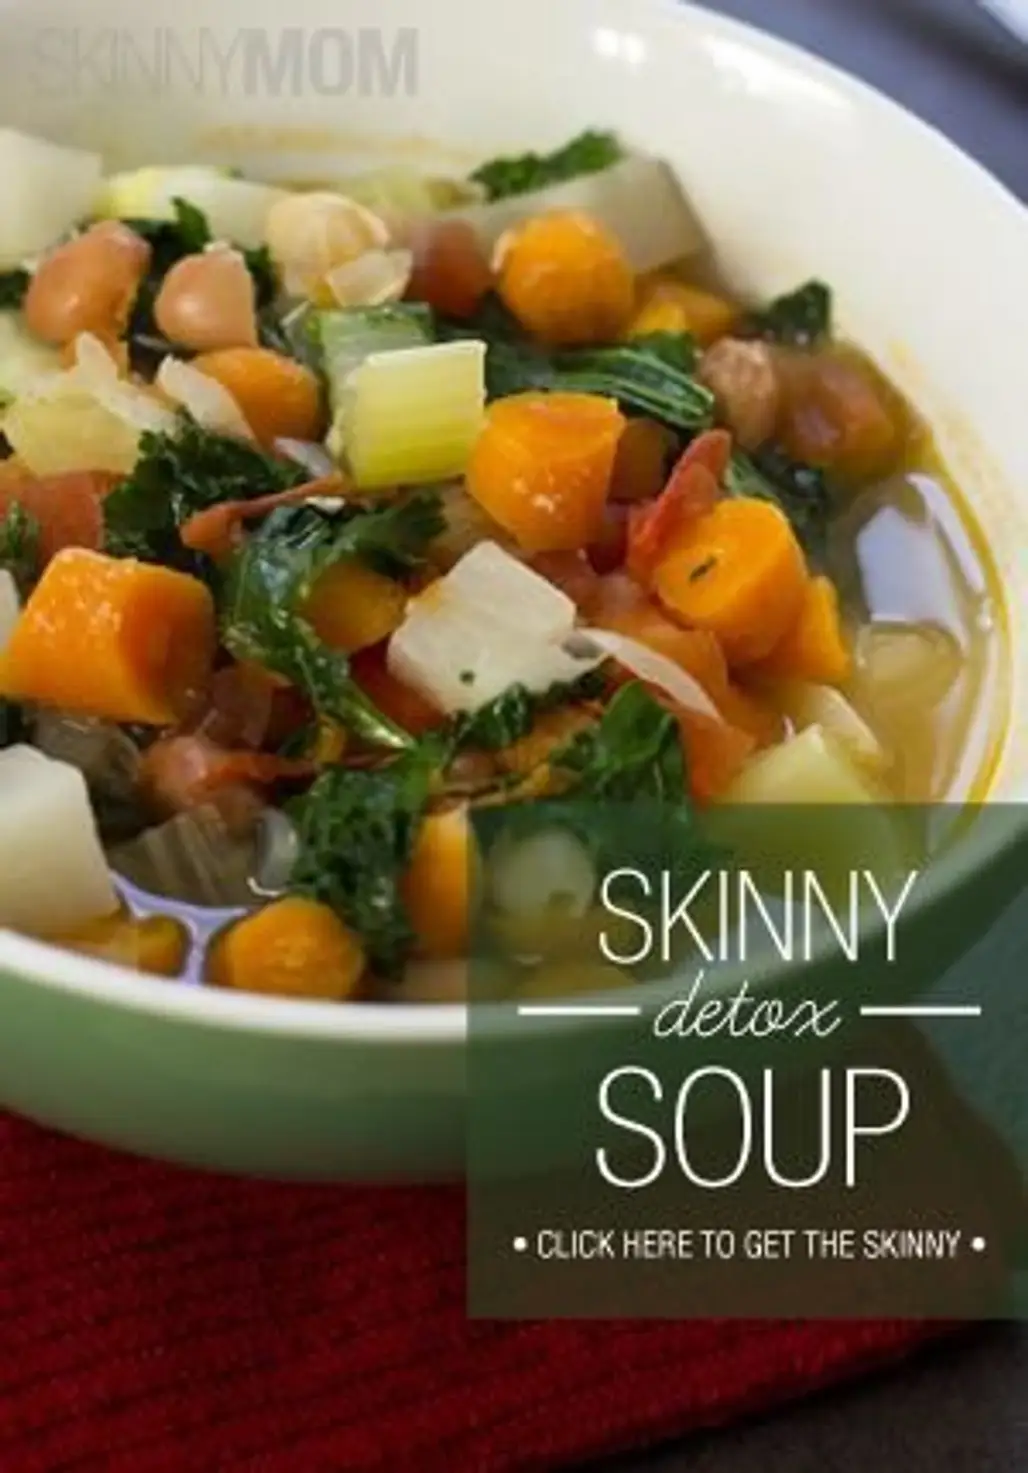 Skinny Detox Soup